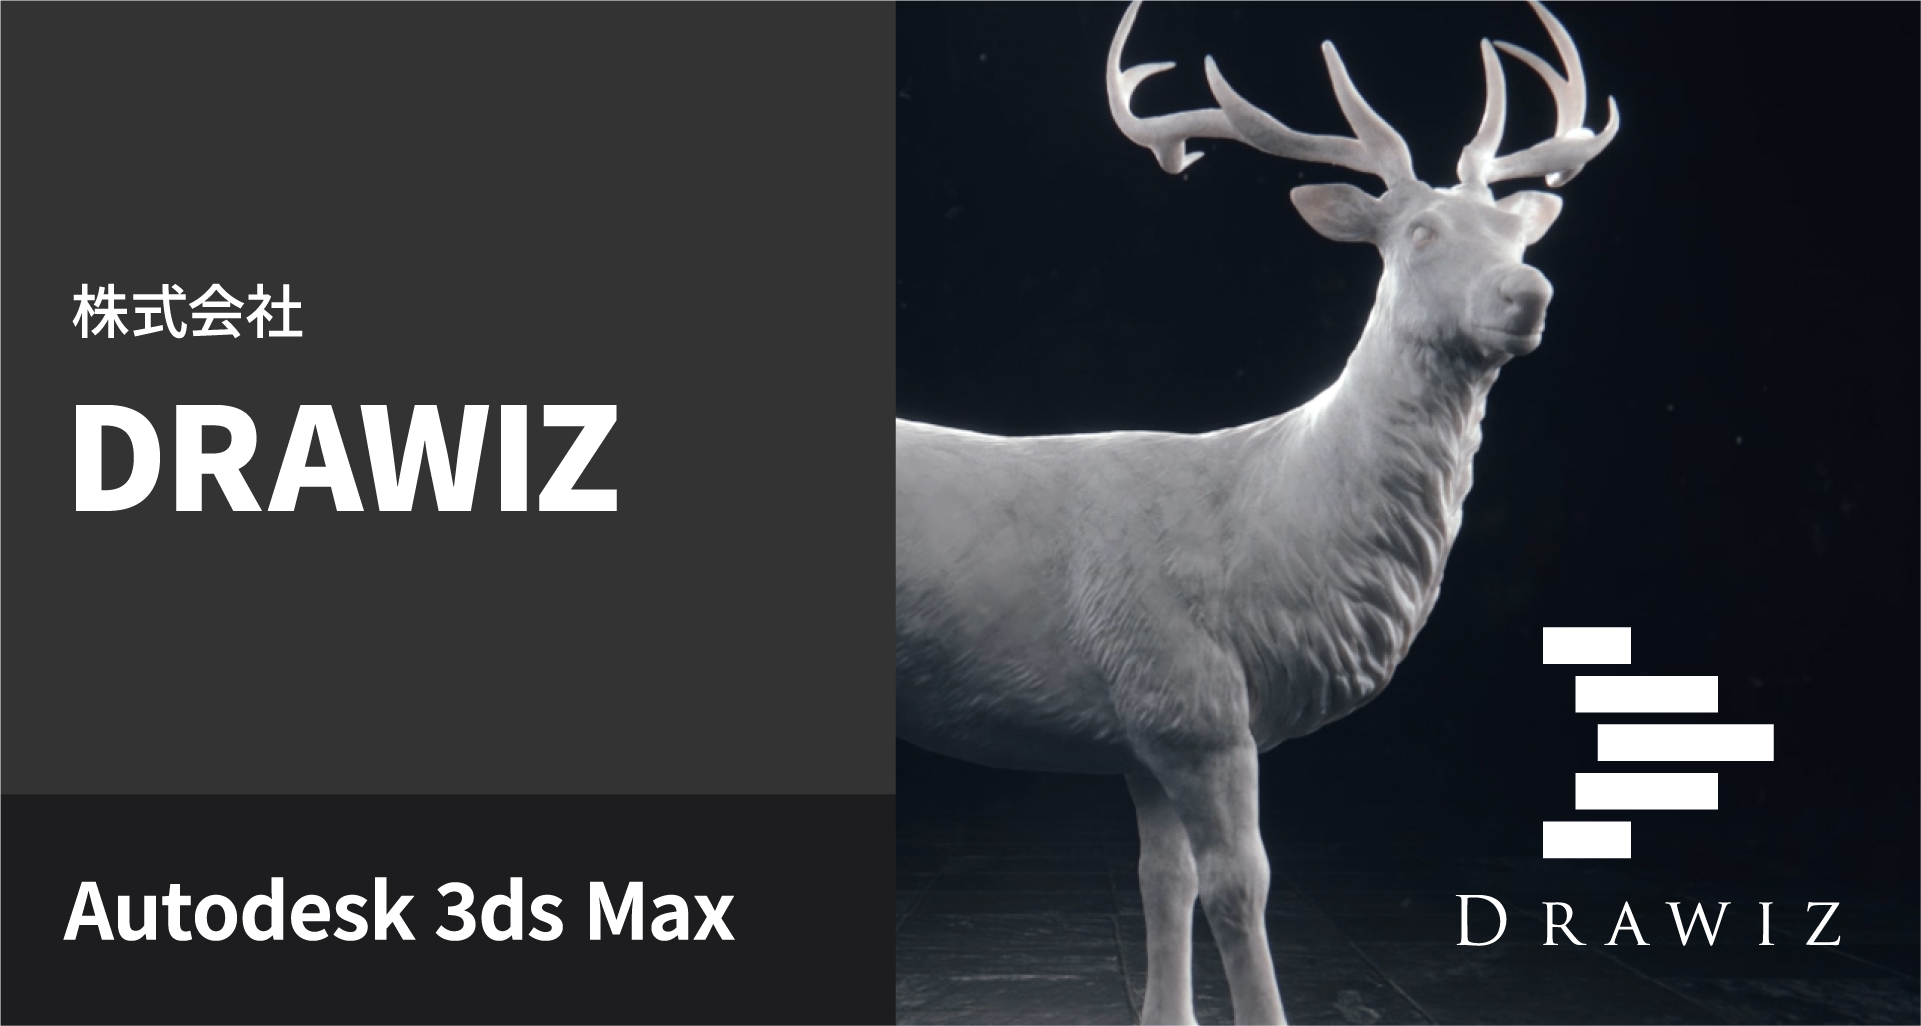 drawiz - Autodesk 3ds Max